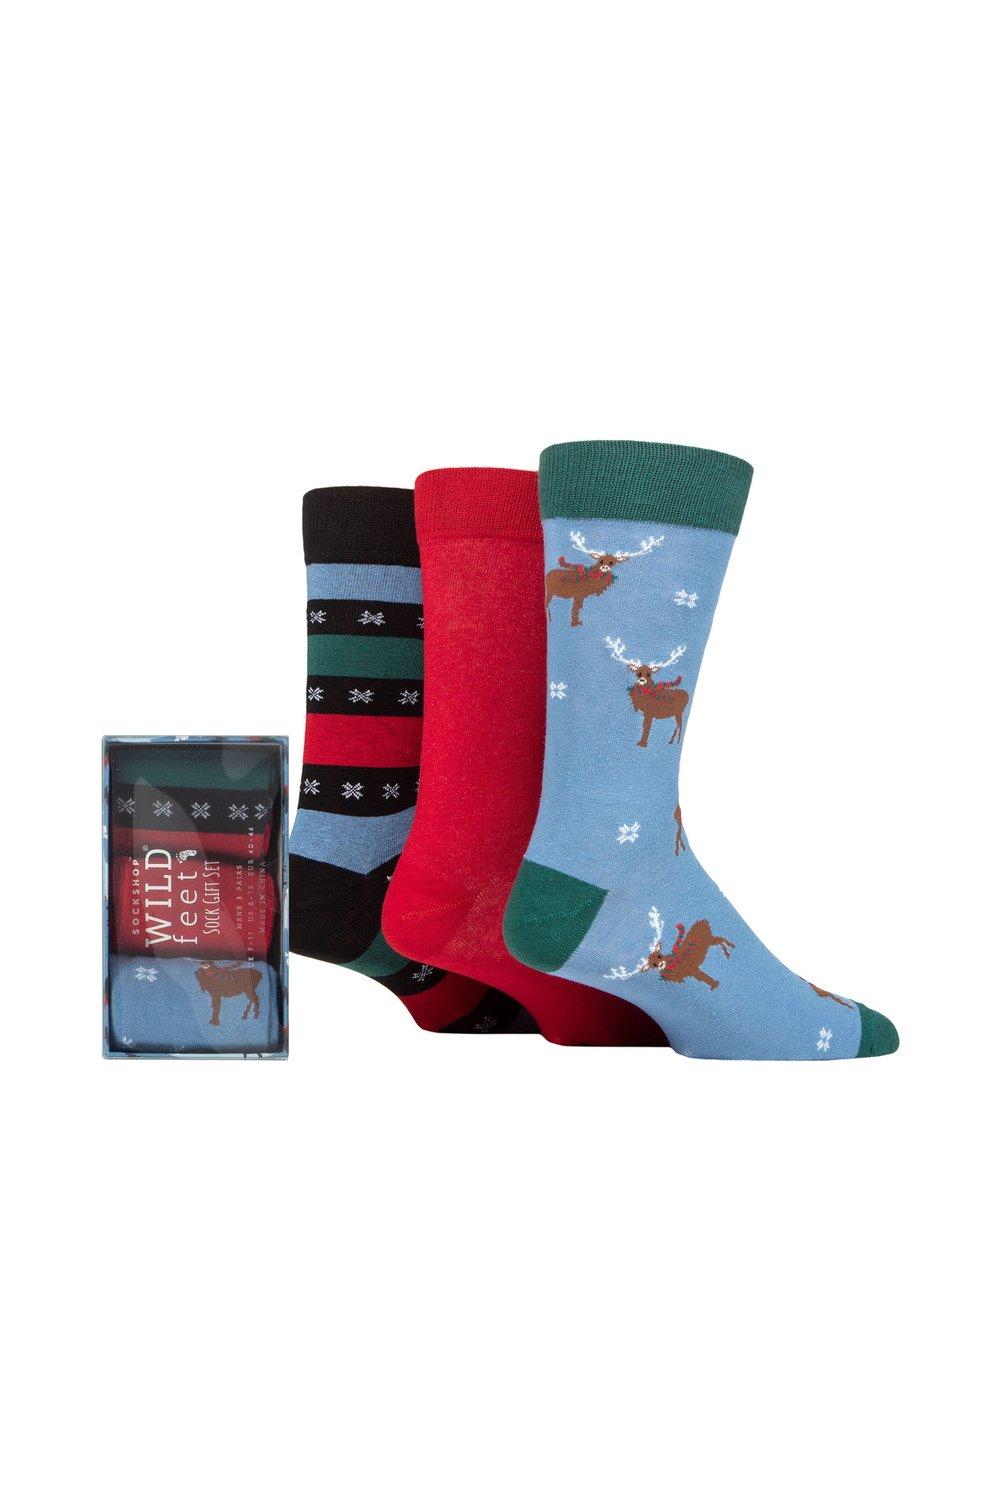 new women striped socks winter warm fluffy socks coral velvet feet warmer christmas gift шкарпэтку 3 пары рождественских подарочных носков Winter Wonderland в упаковке SOCKSHOP Wild Feet, мультиколор